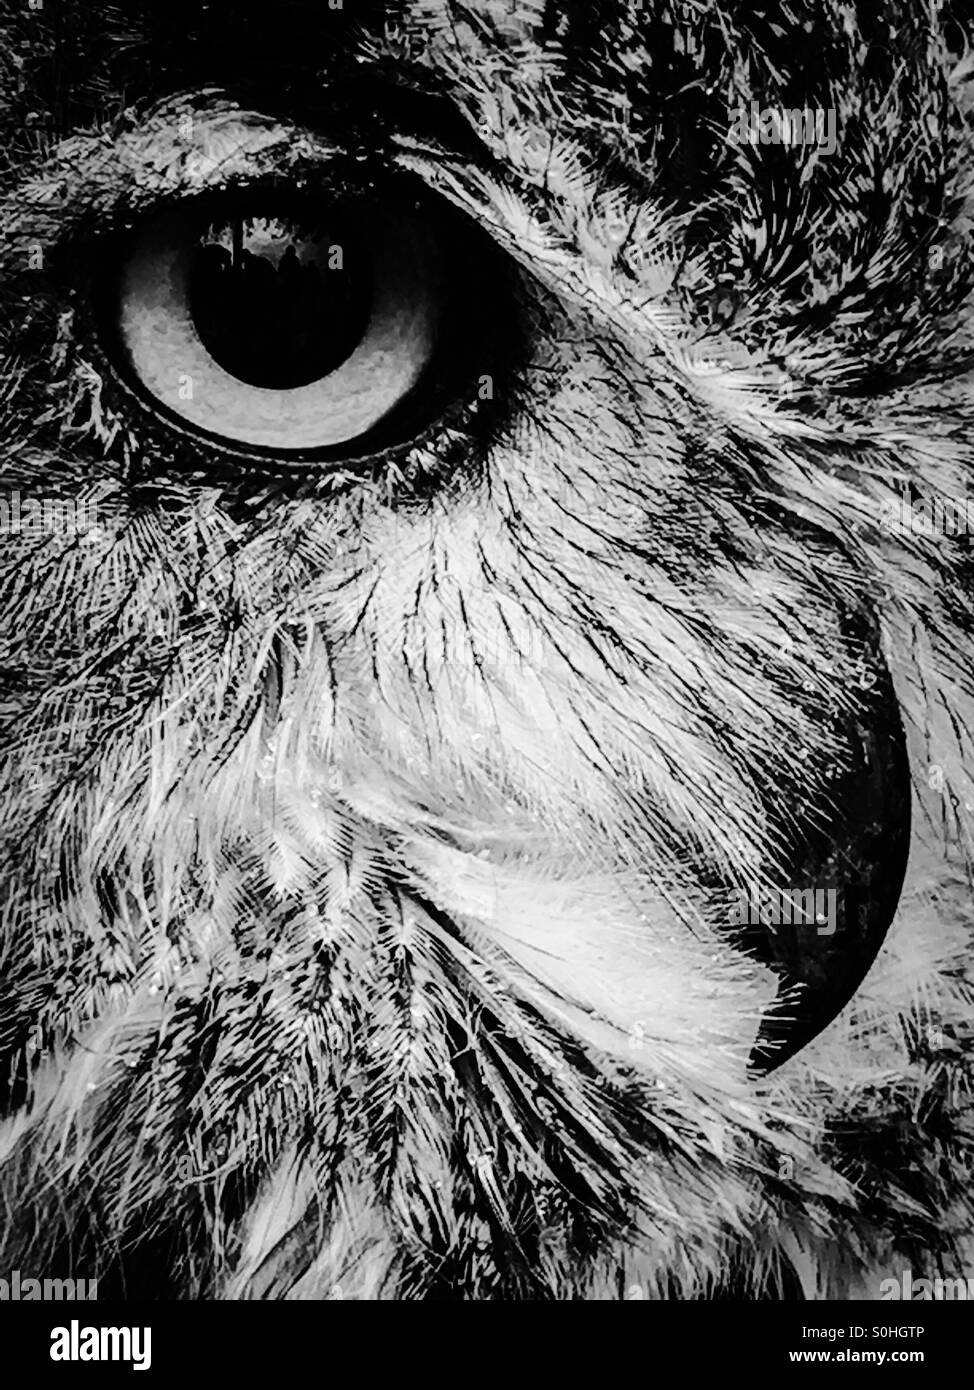 White Owl Black And White Stock Photos Images Alamy